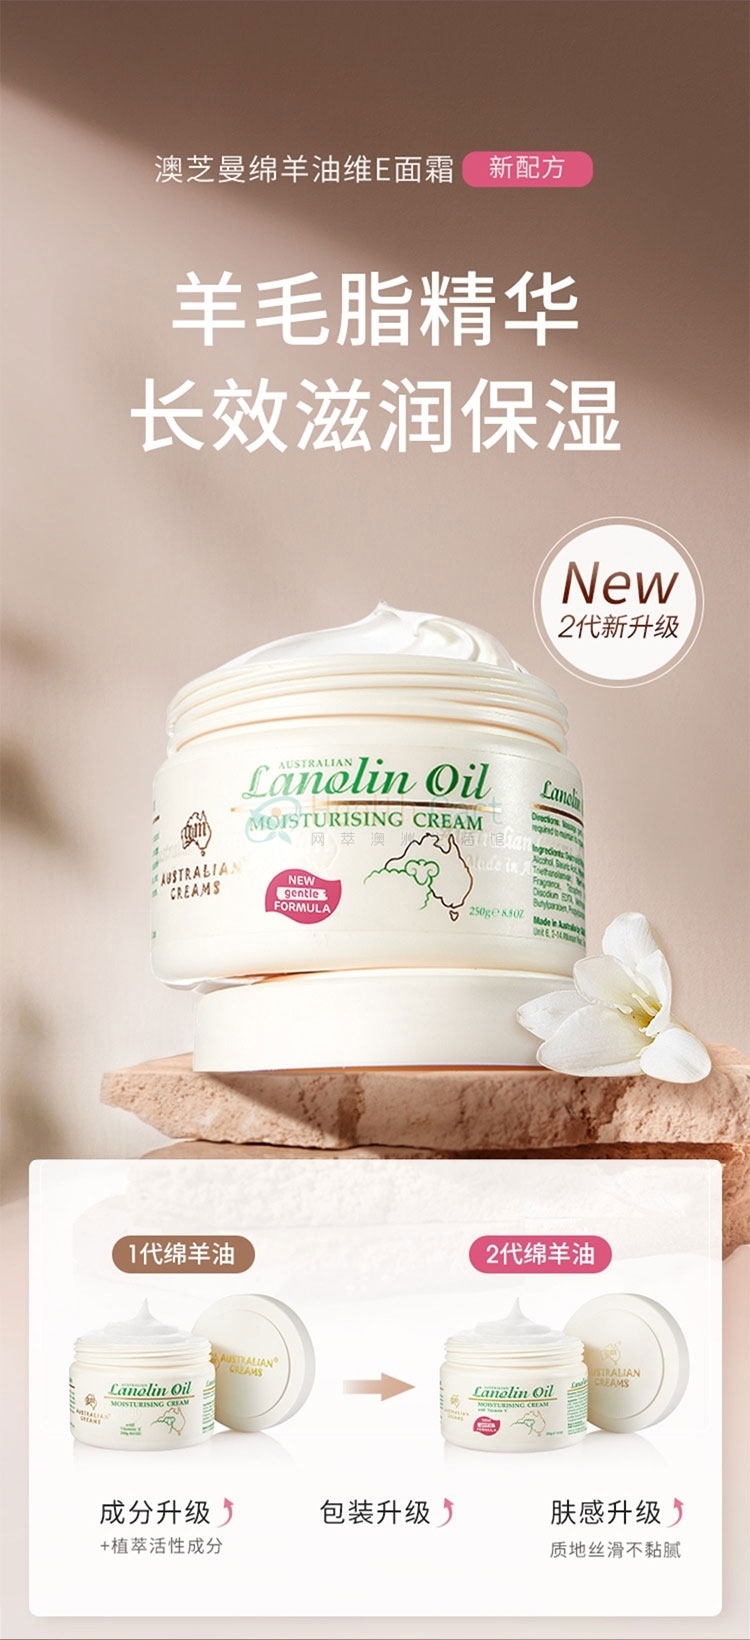 g&m澳芝曼维生素E绵羊油面霜250g - @gm australian lanolin oil day moisturising cream 250g - 2 - Healthcart 网萃澳洲生活馆